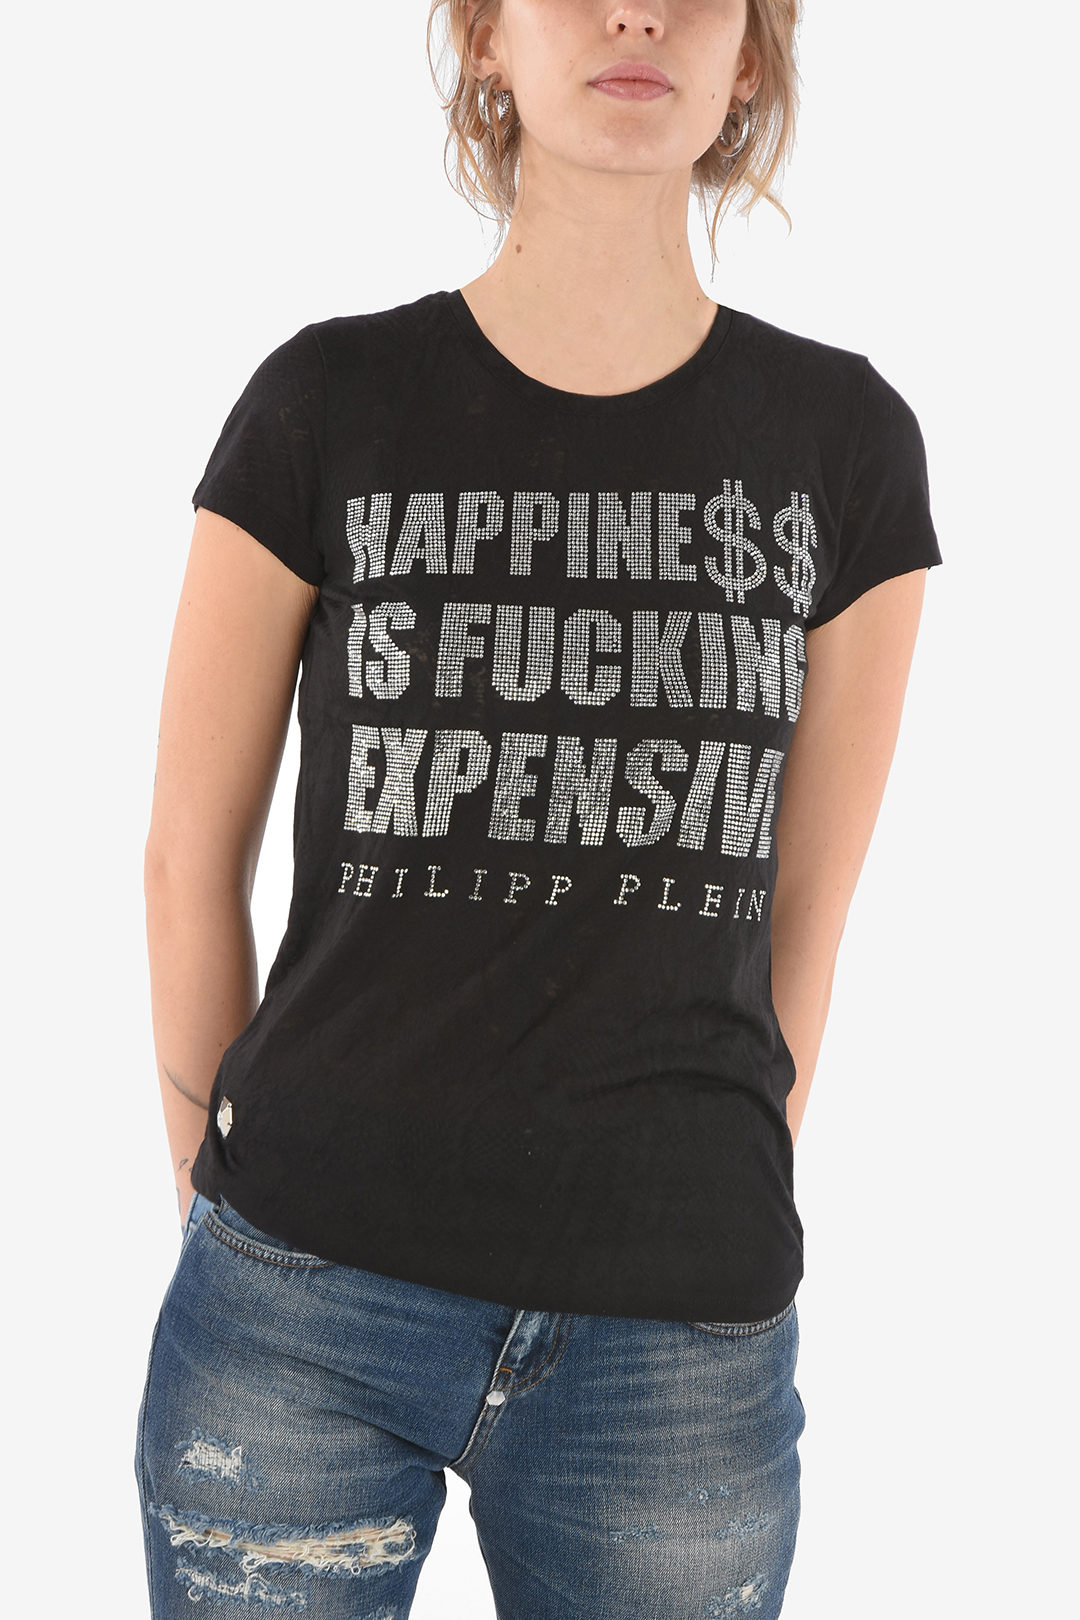 Kinematica Leugen donker Philipp Plein Cotton HAPPINE$$ T-Shirt women - Glamood Outlet